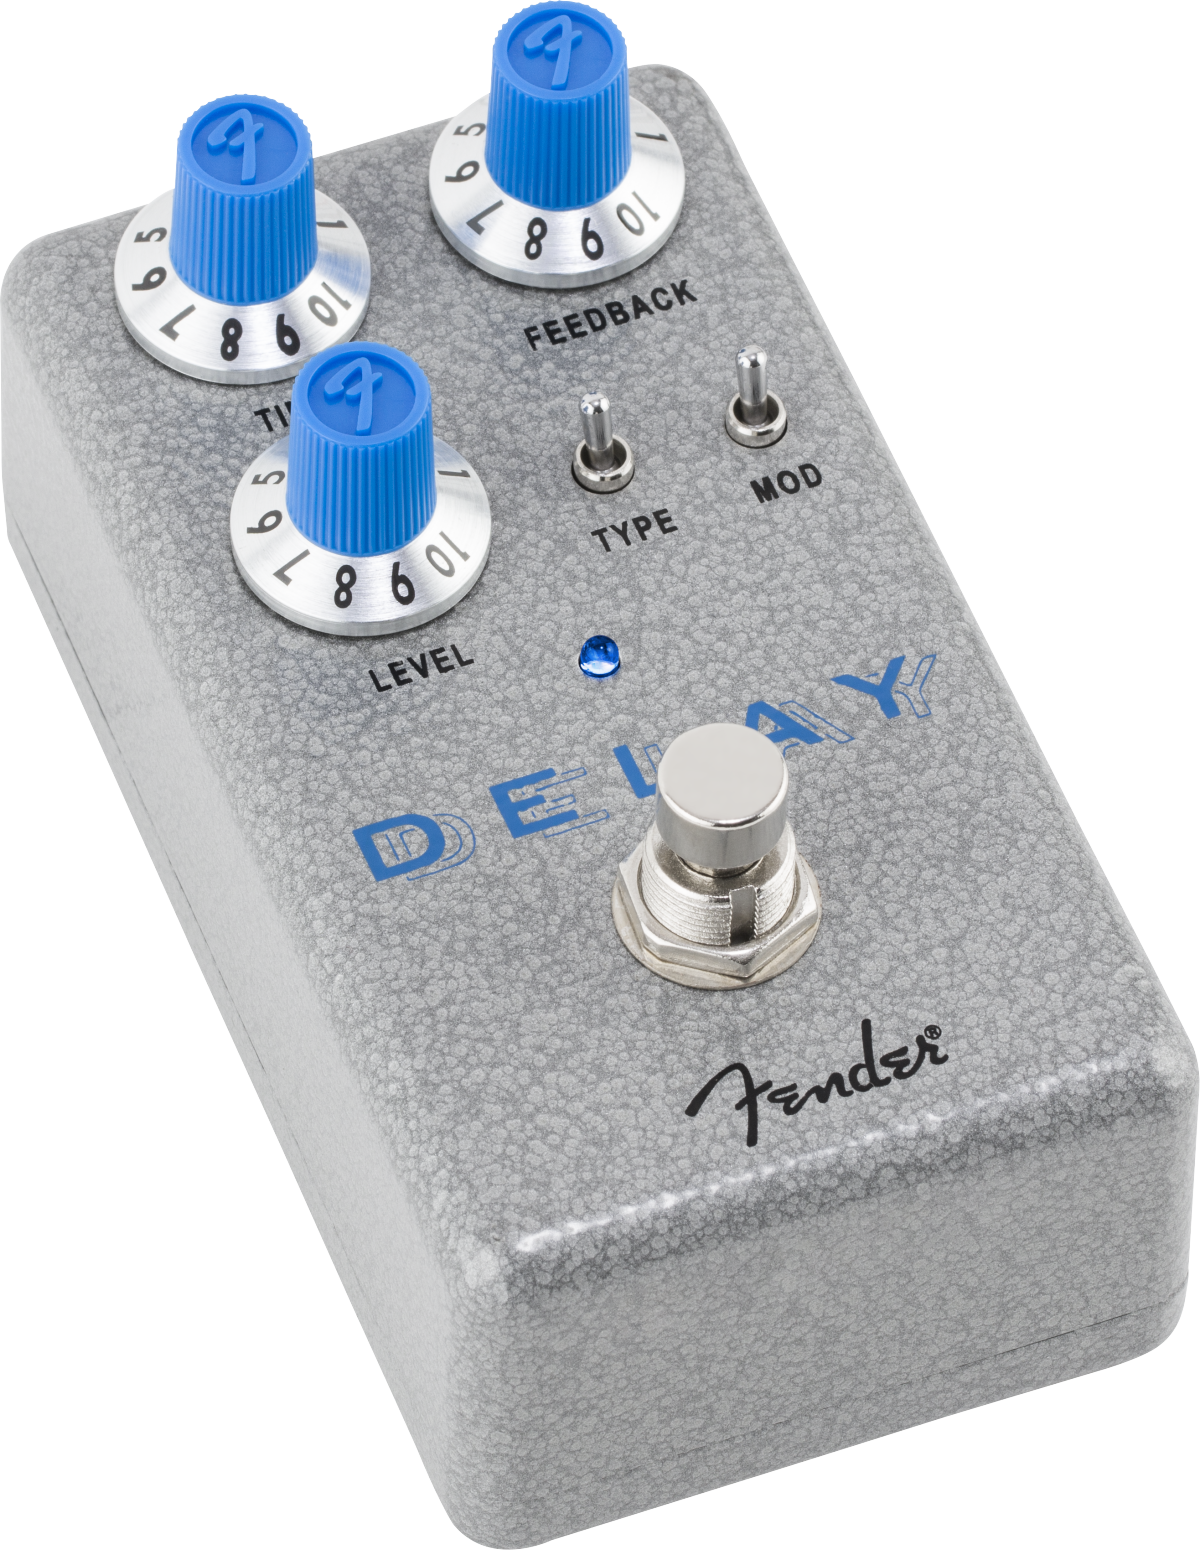 Fender Hammertone Delay - Reverb/delay/echo effect pedaal - Main picture